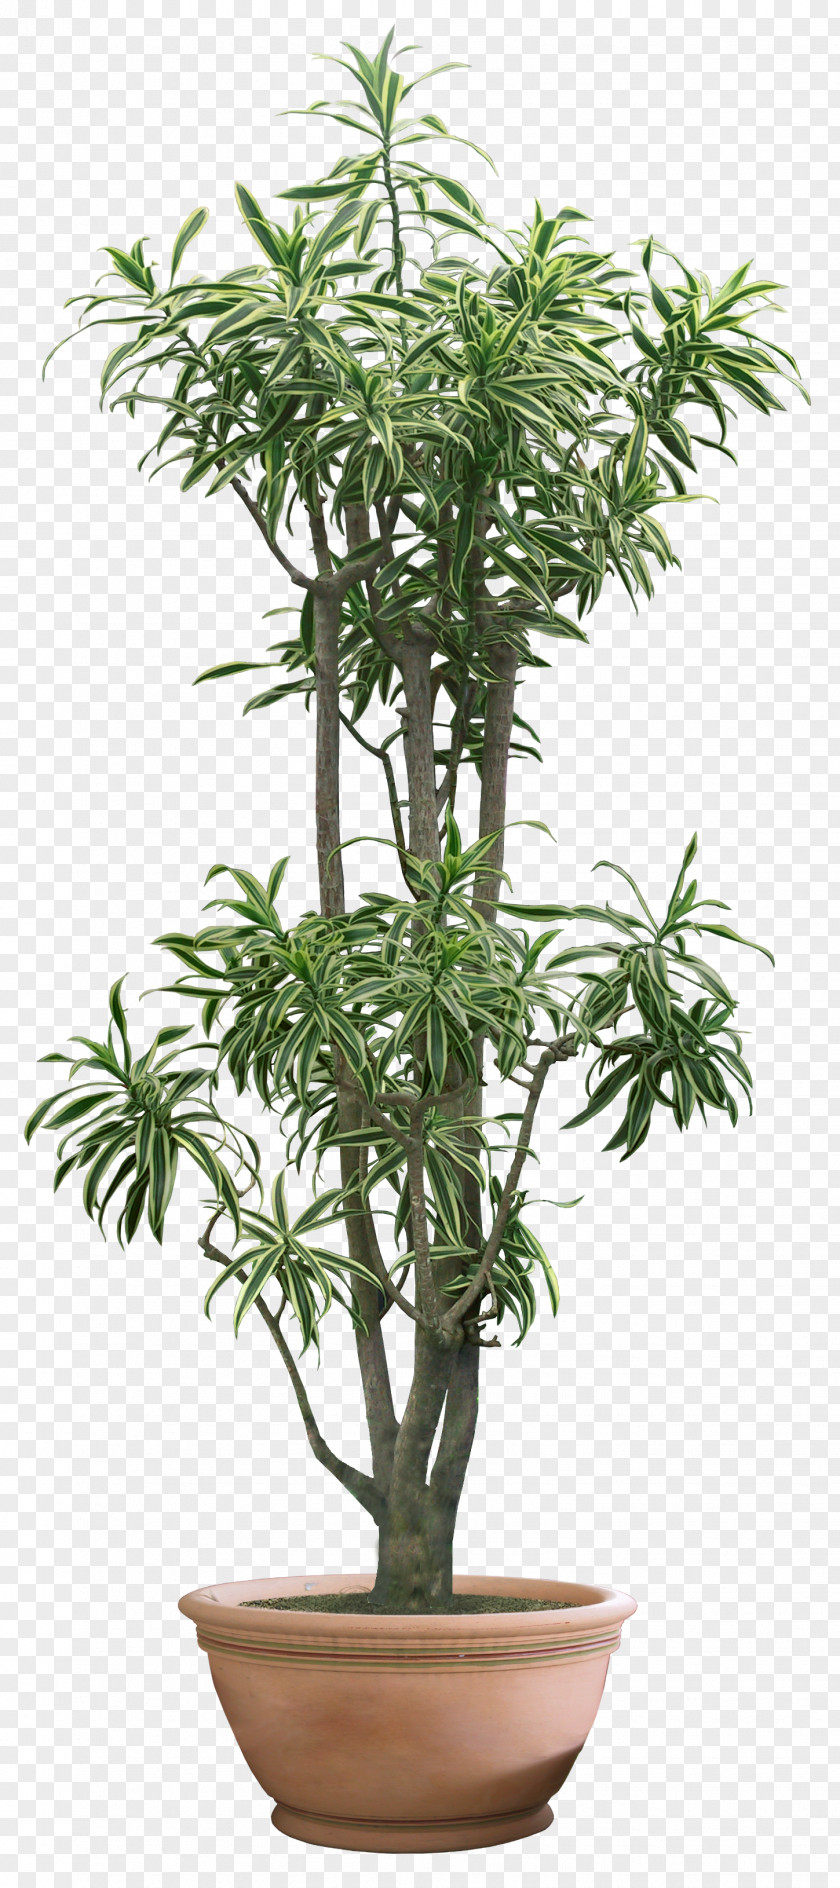 Bush Tree Bamboo Houseplant Bonsai Penjing PNG